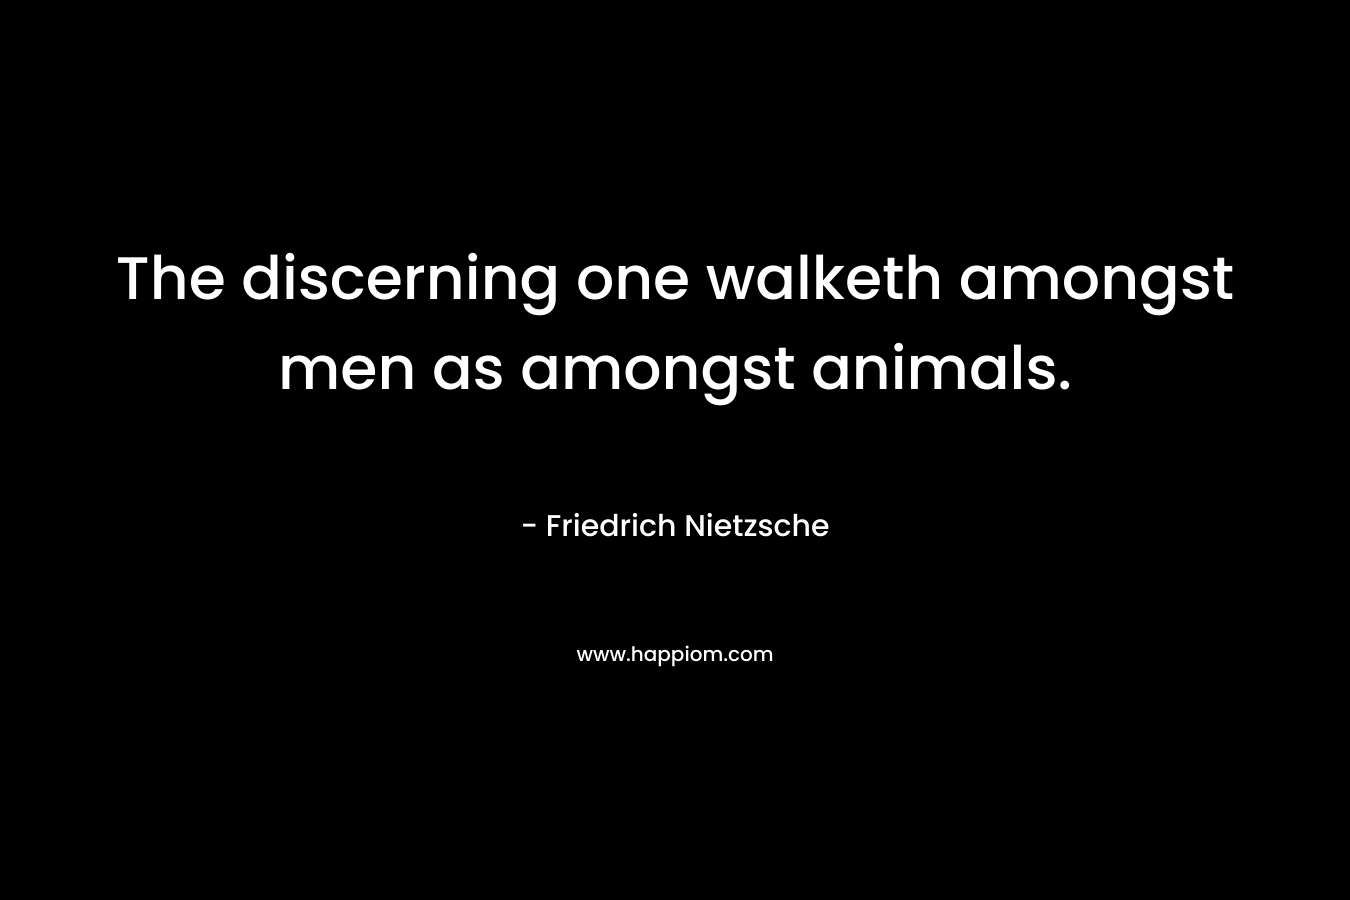 The discerning one walketh amongst men as amongst animals.